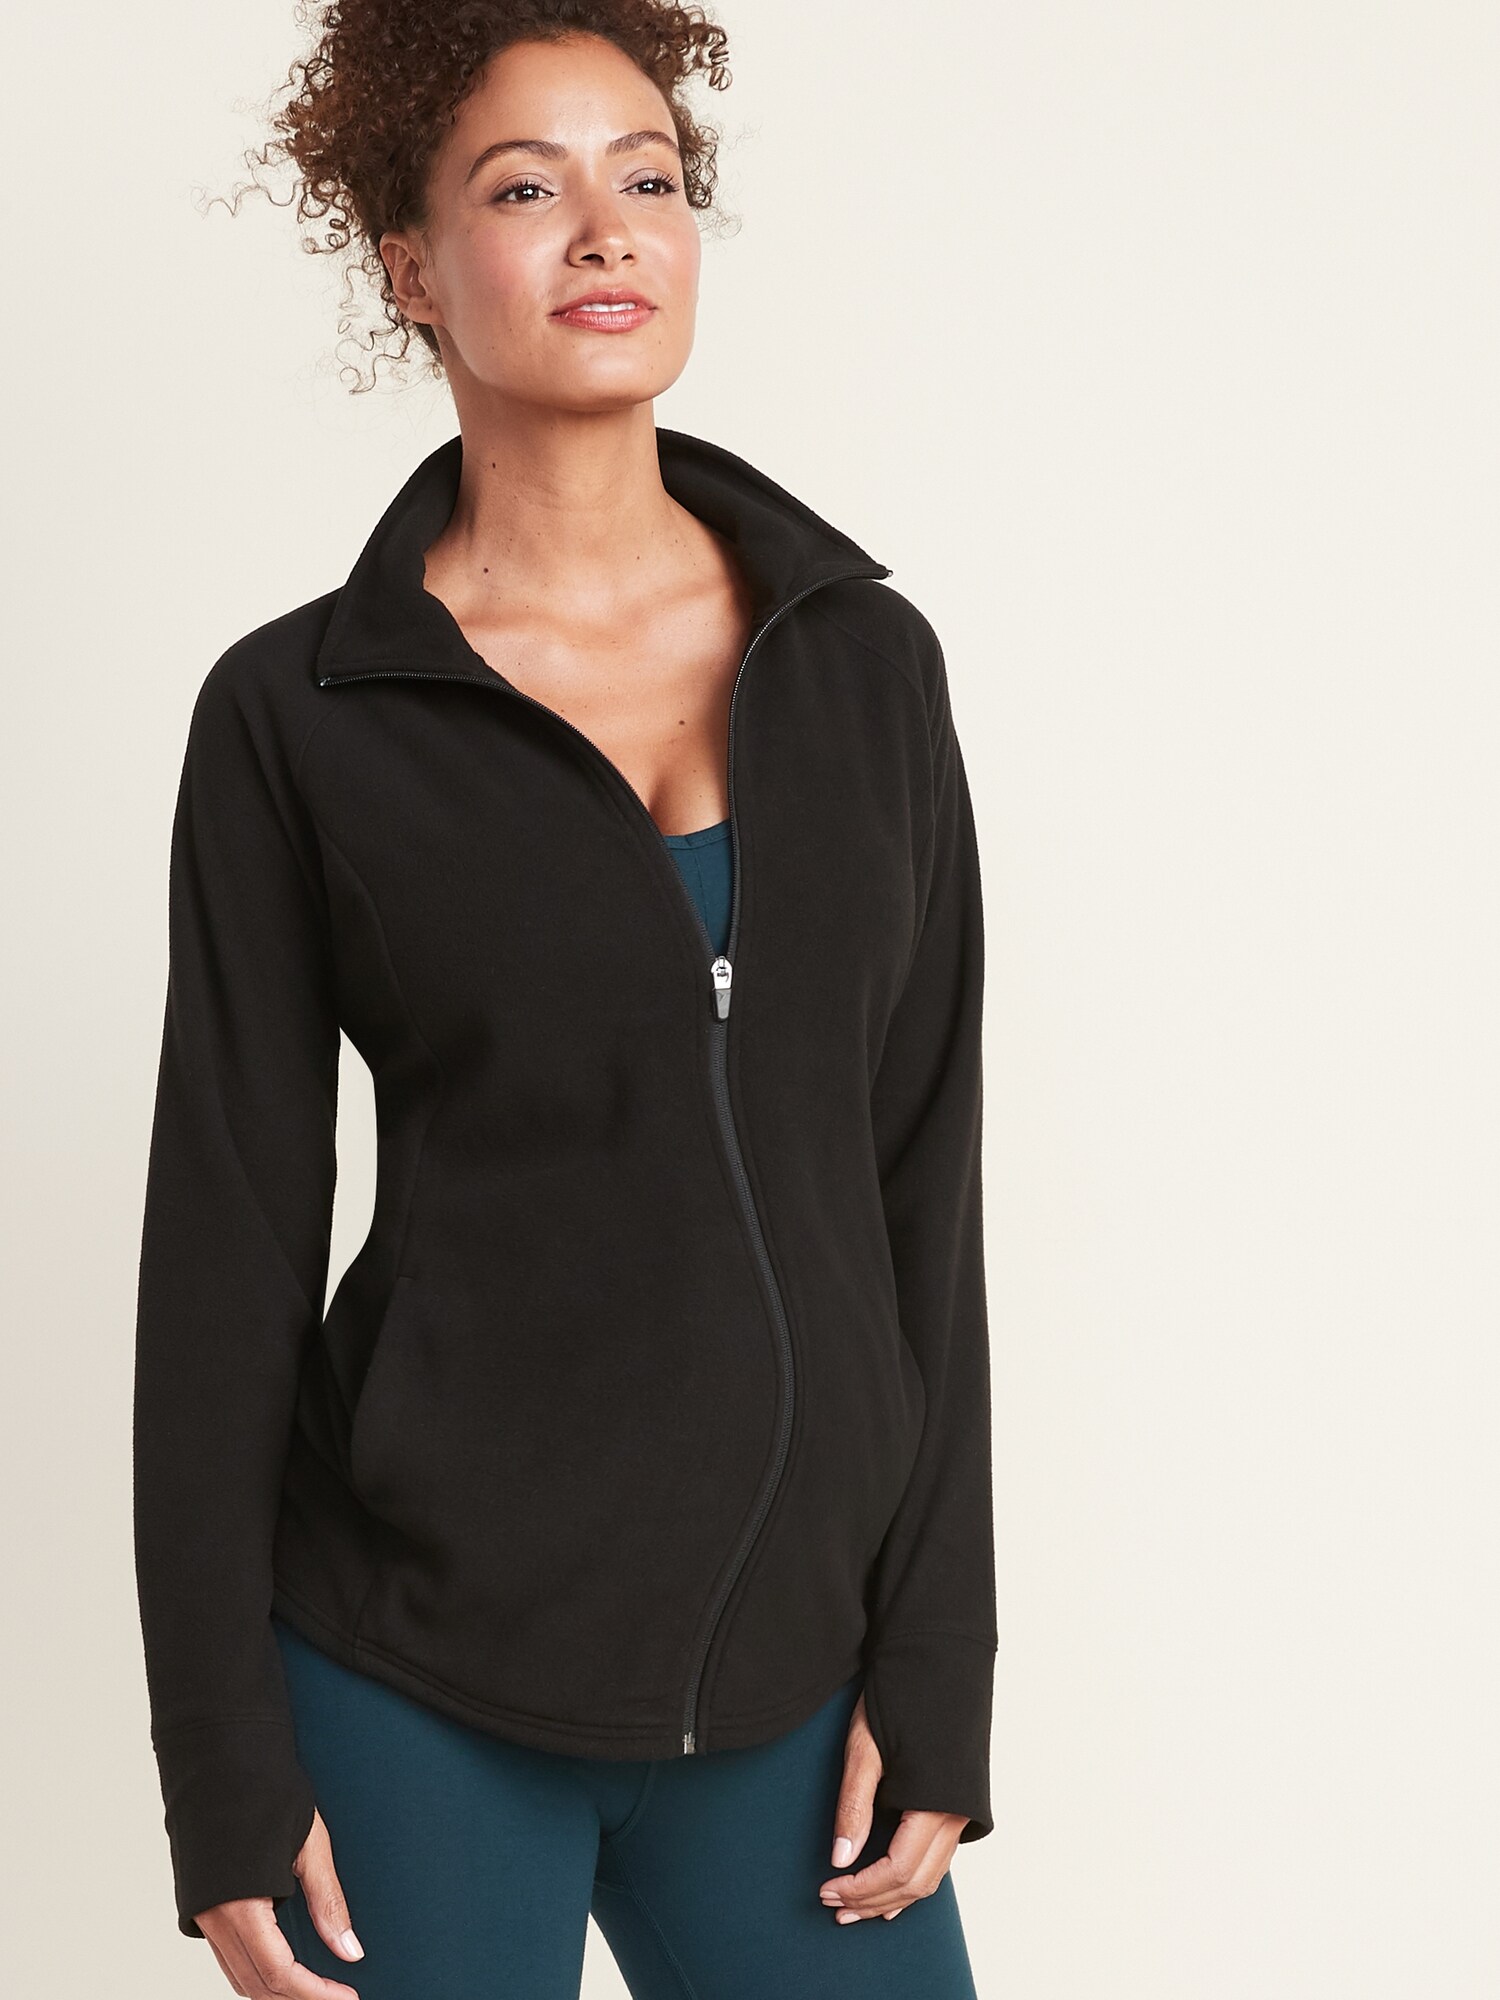 Semi-Fitted Full-Zip Performance Fleece Jacket for Women